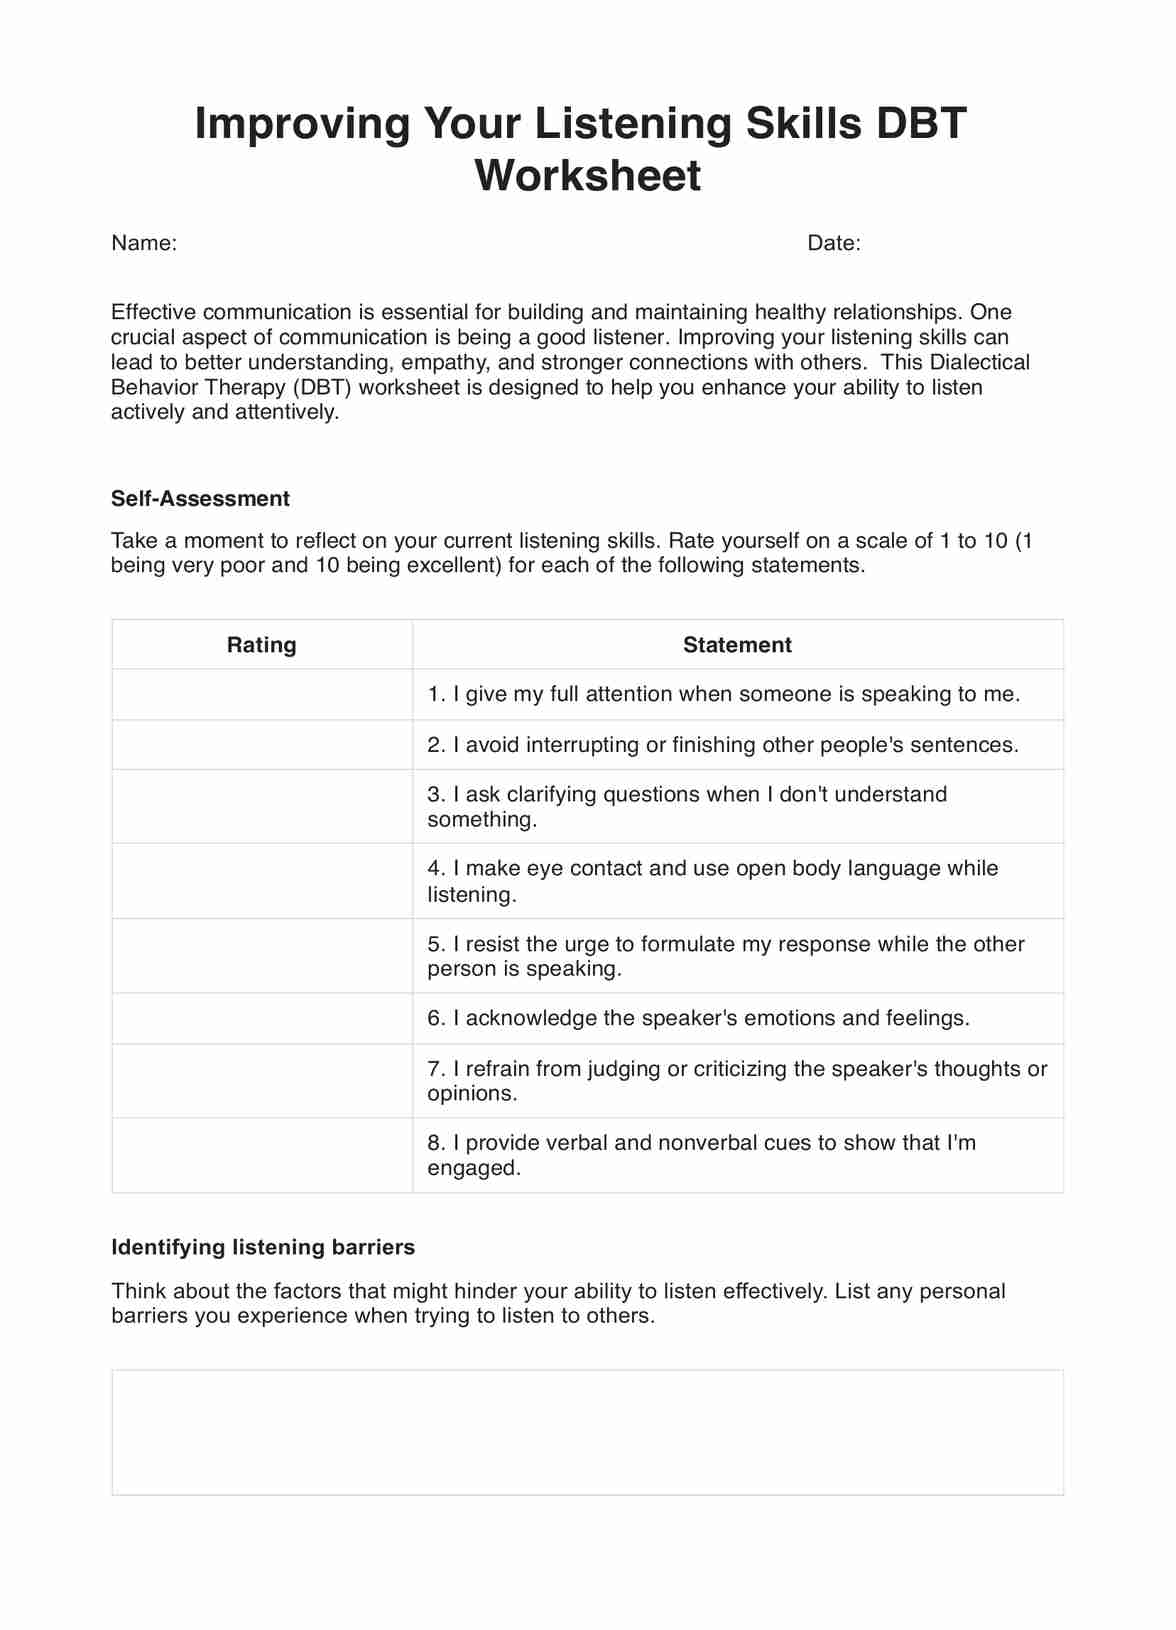 Improving Your Listening Skills DBT Worksheet PDF Example